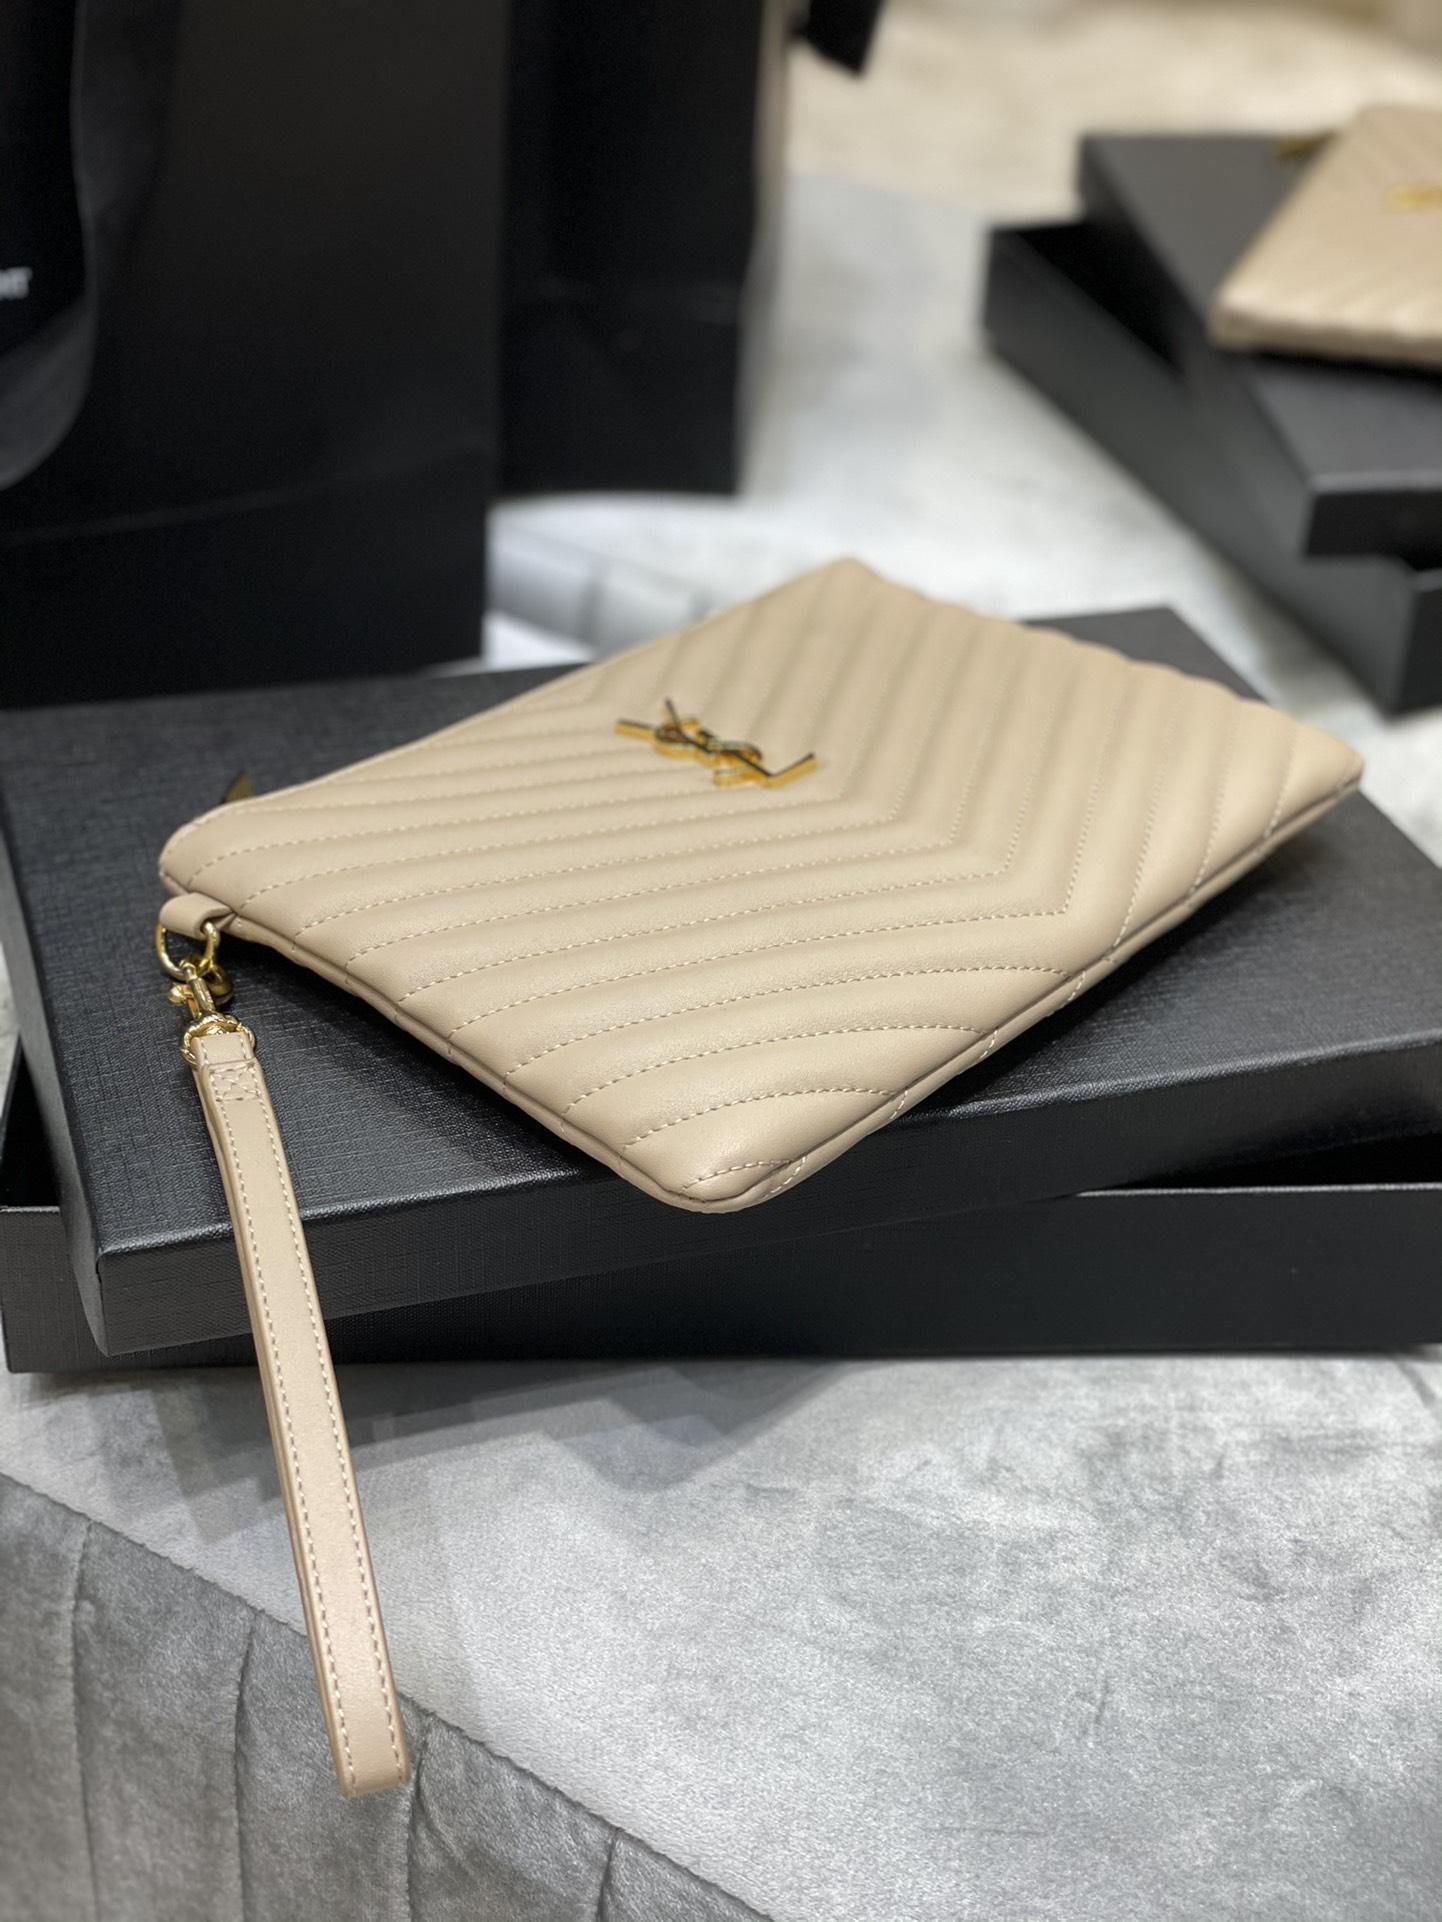 Yves Saint Laurent Matelasse Leather Monogram Clutch Bag in beige     clutch 3